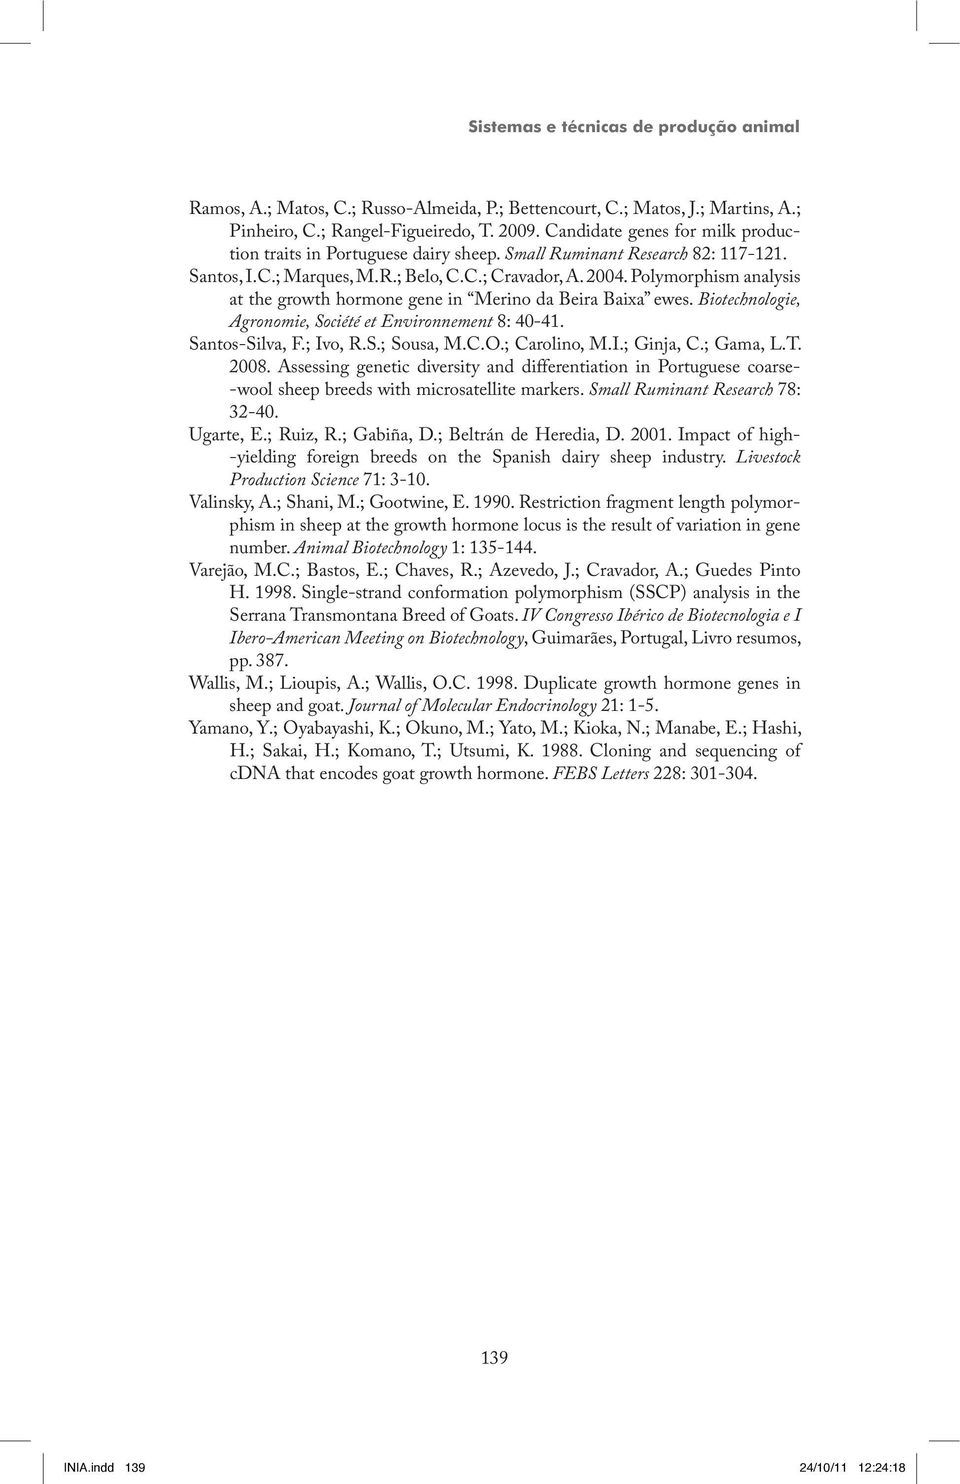 Polymorphism analysis at the growth hormone gene in Merino da Beira Baixa ewes. Biotechnologie, Agronomie, Société et Environnement 8: 40-41. Santos -Silva, F.; Ivo, R.S.; Sousa, M.C.O.; Carolino, M.